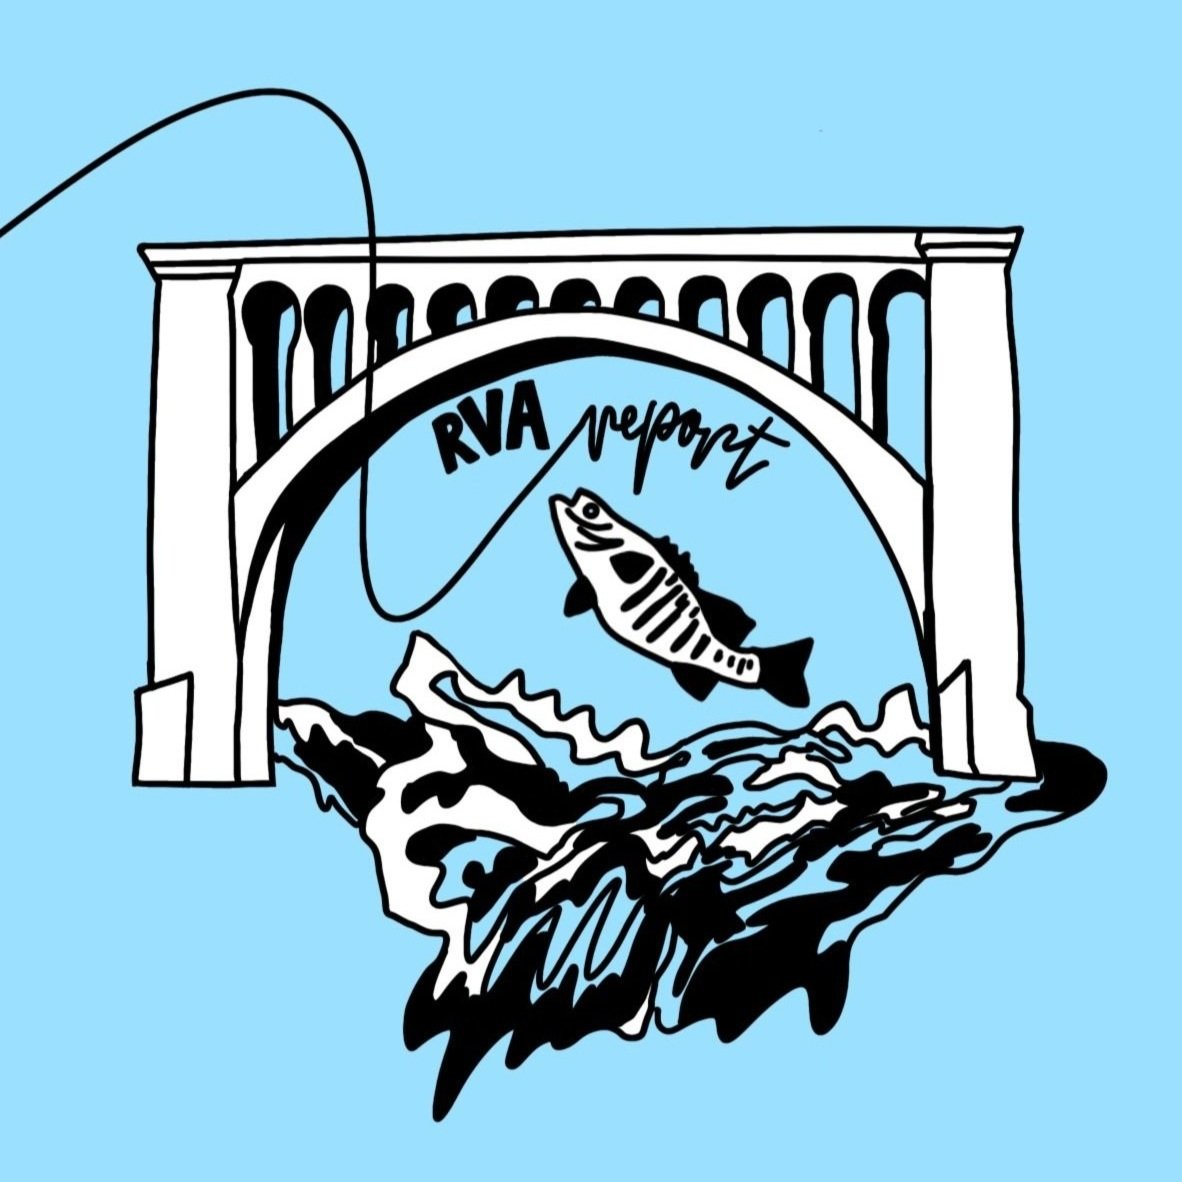 RVA James River Fishing Report